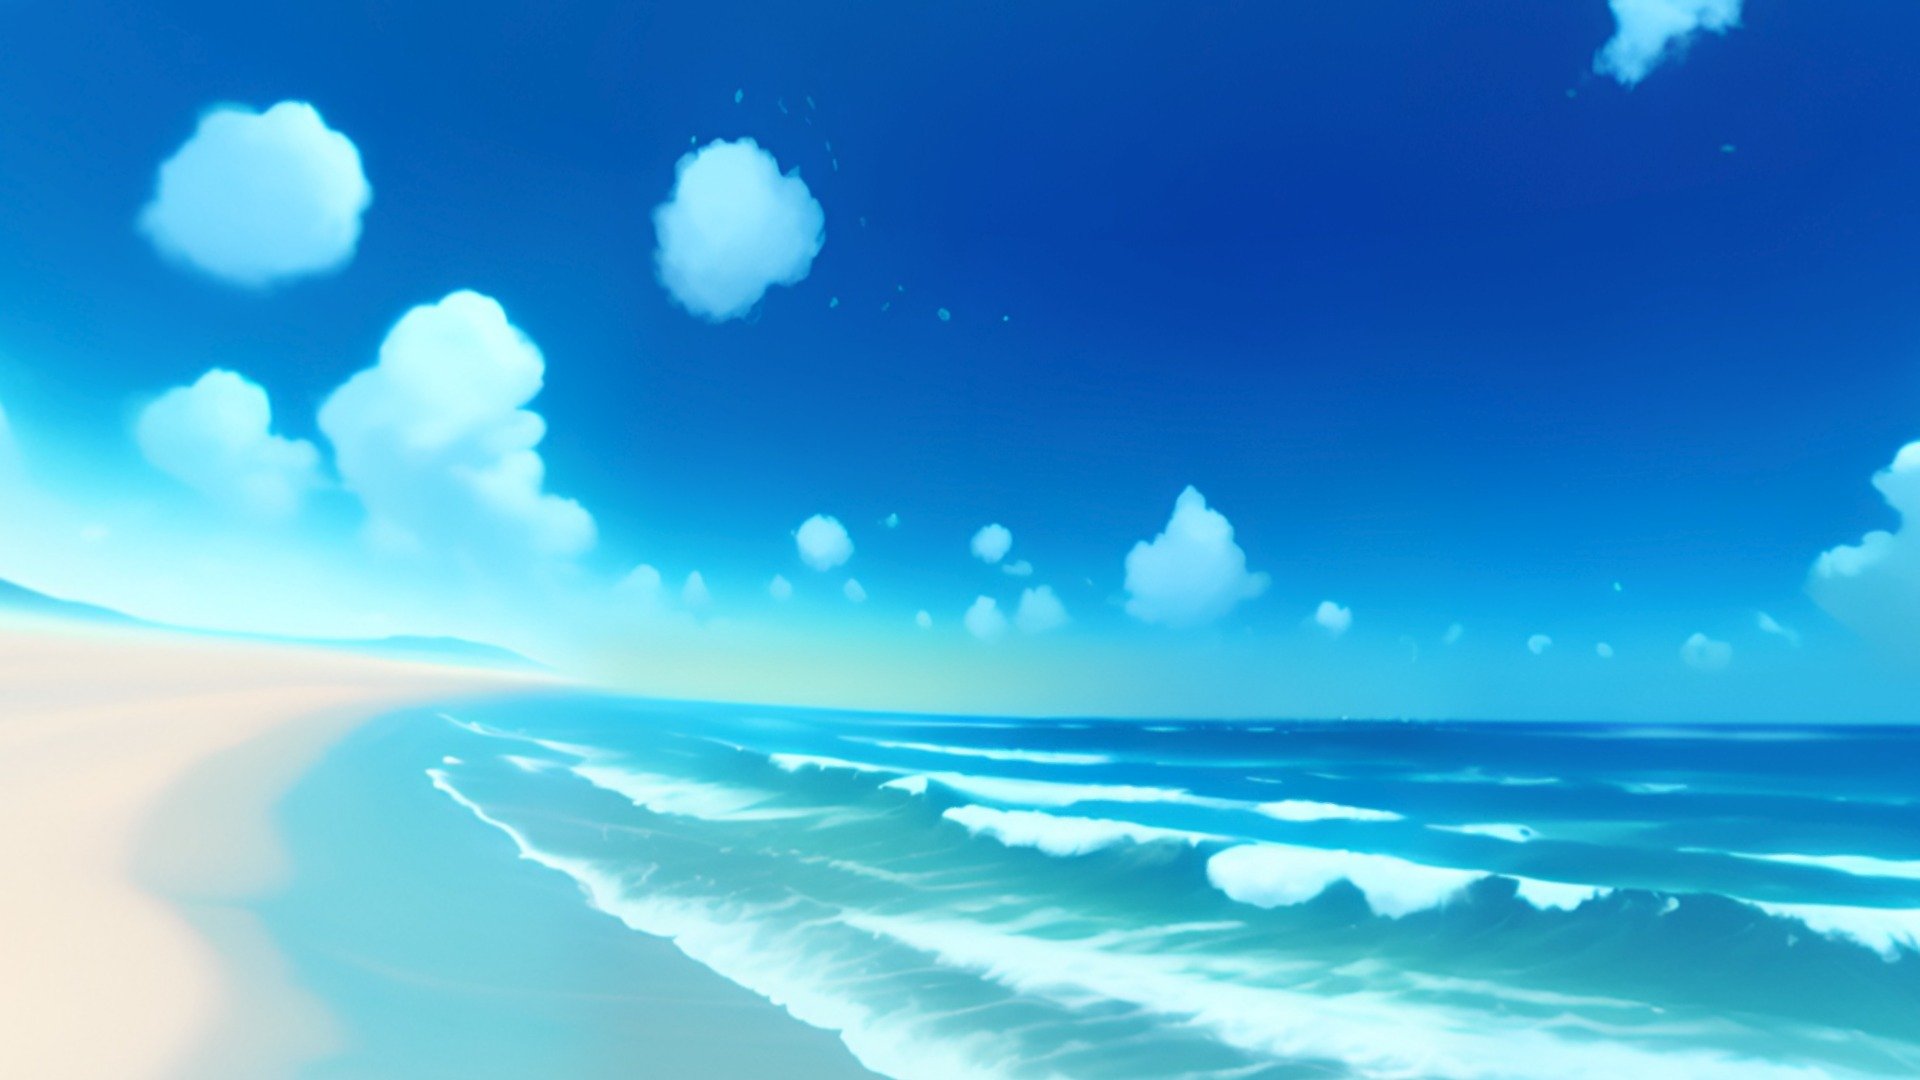 Anime Beach Images - Free Download on Freepik